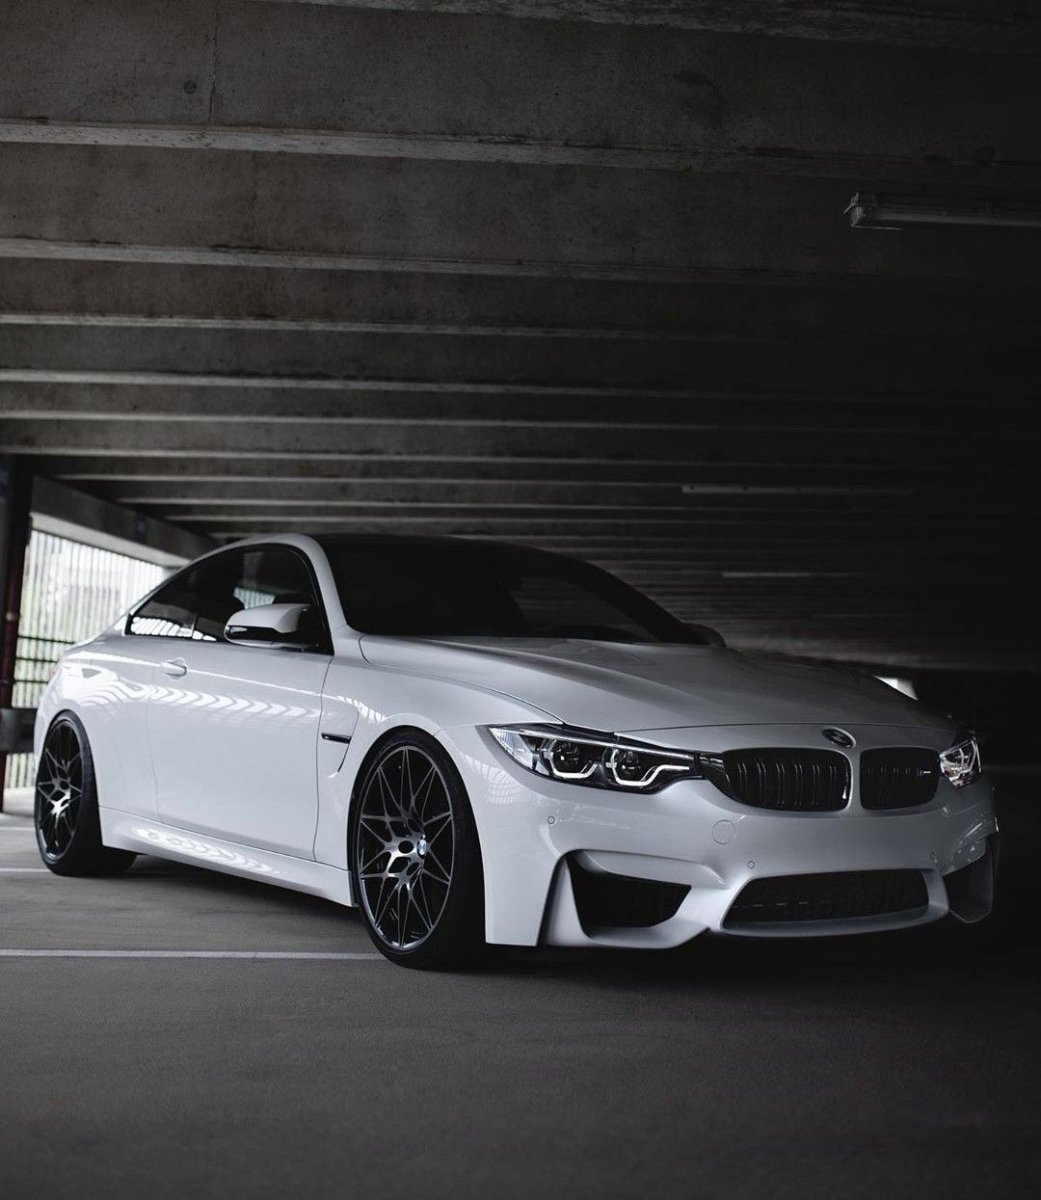 BMW m4 image